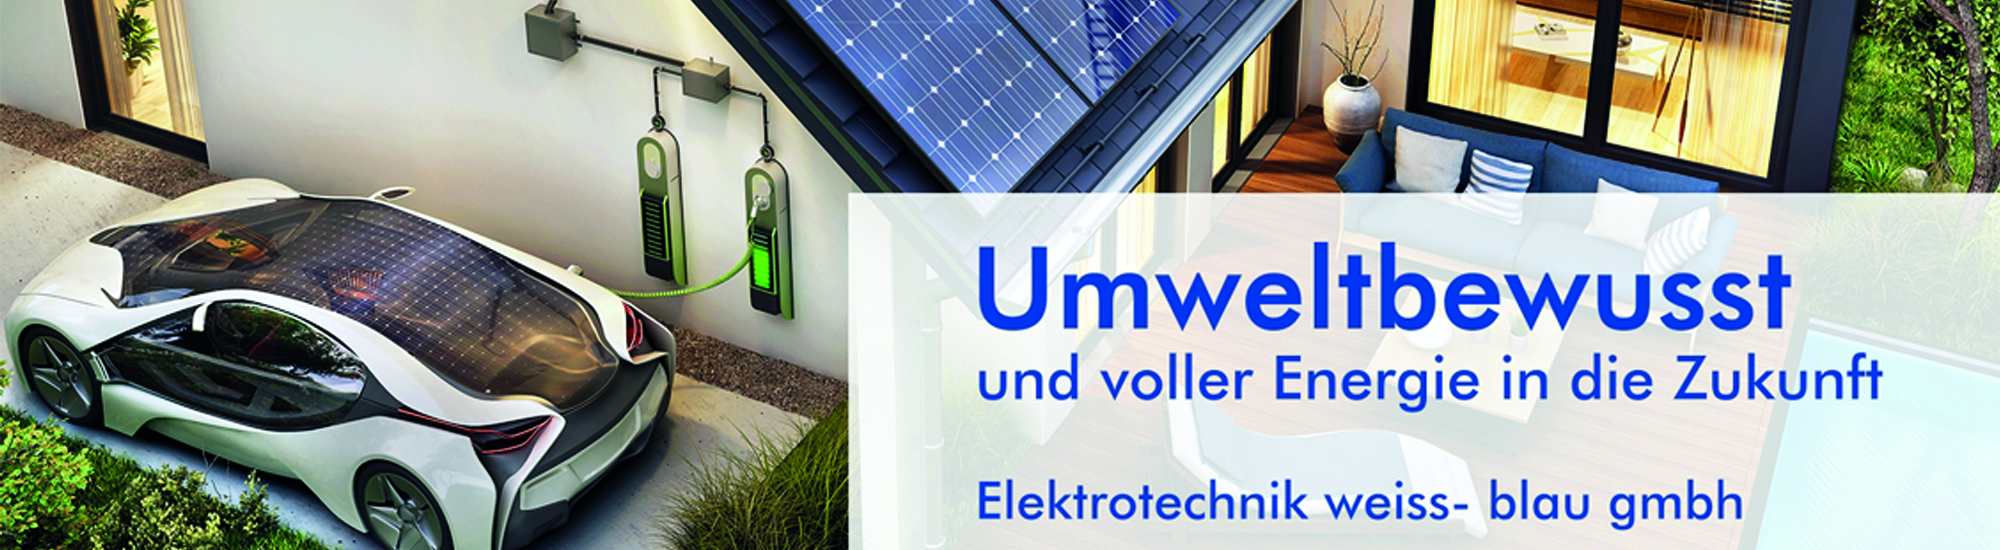 weiss-blau gmbh Photovoltaik Elektrotechnik